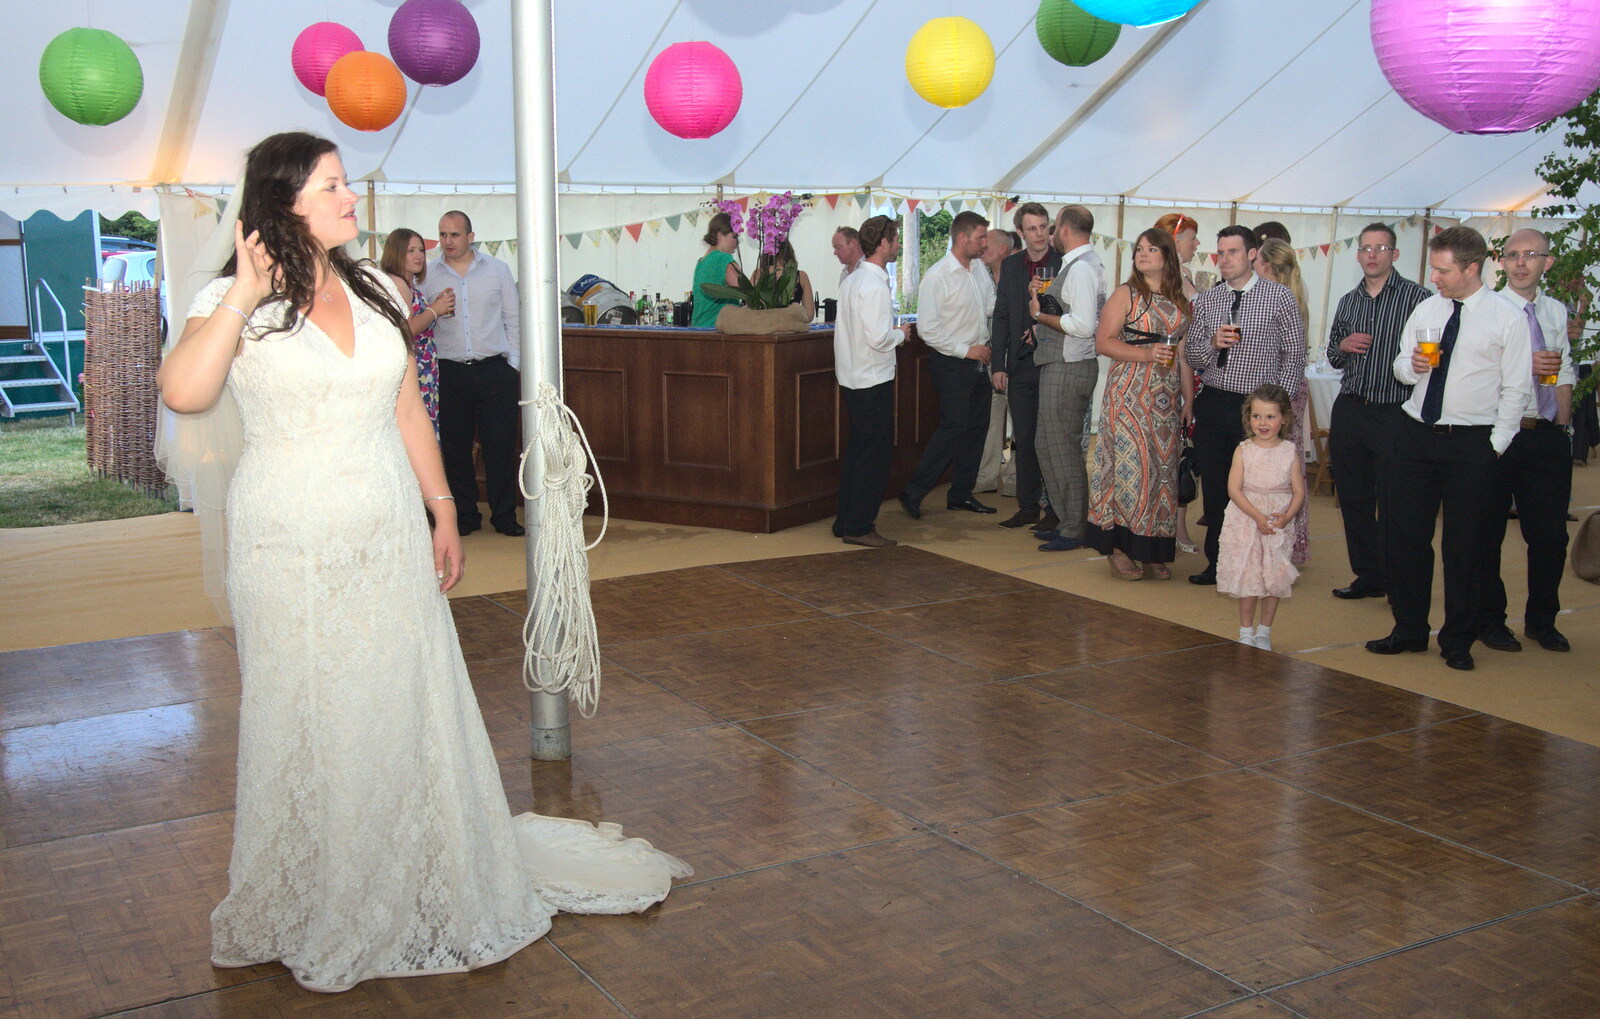 Steph on the dancefloor from The BBs Play Steph's Wedding, Burston, Norfolk - 13th July 2013